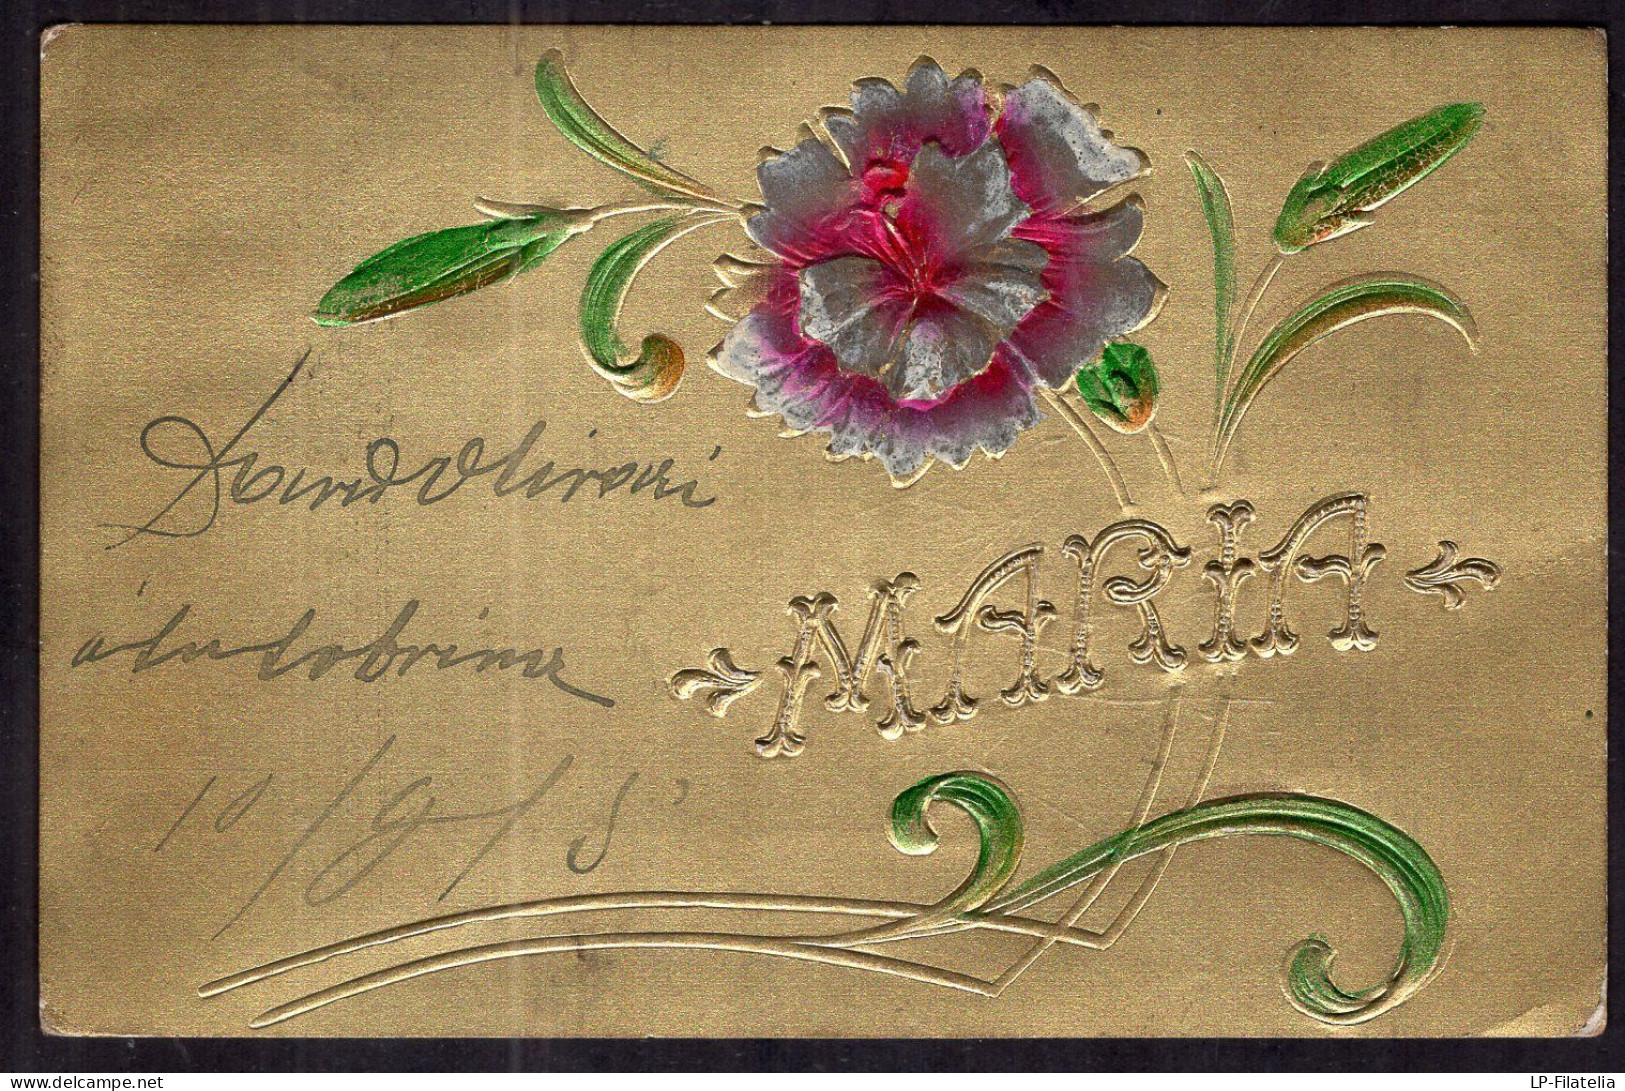 Postcard - 1915 - Decorated - Flowers - Maria Postcard - Blumen